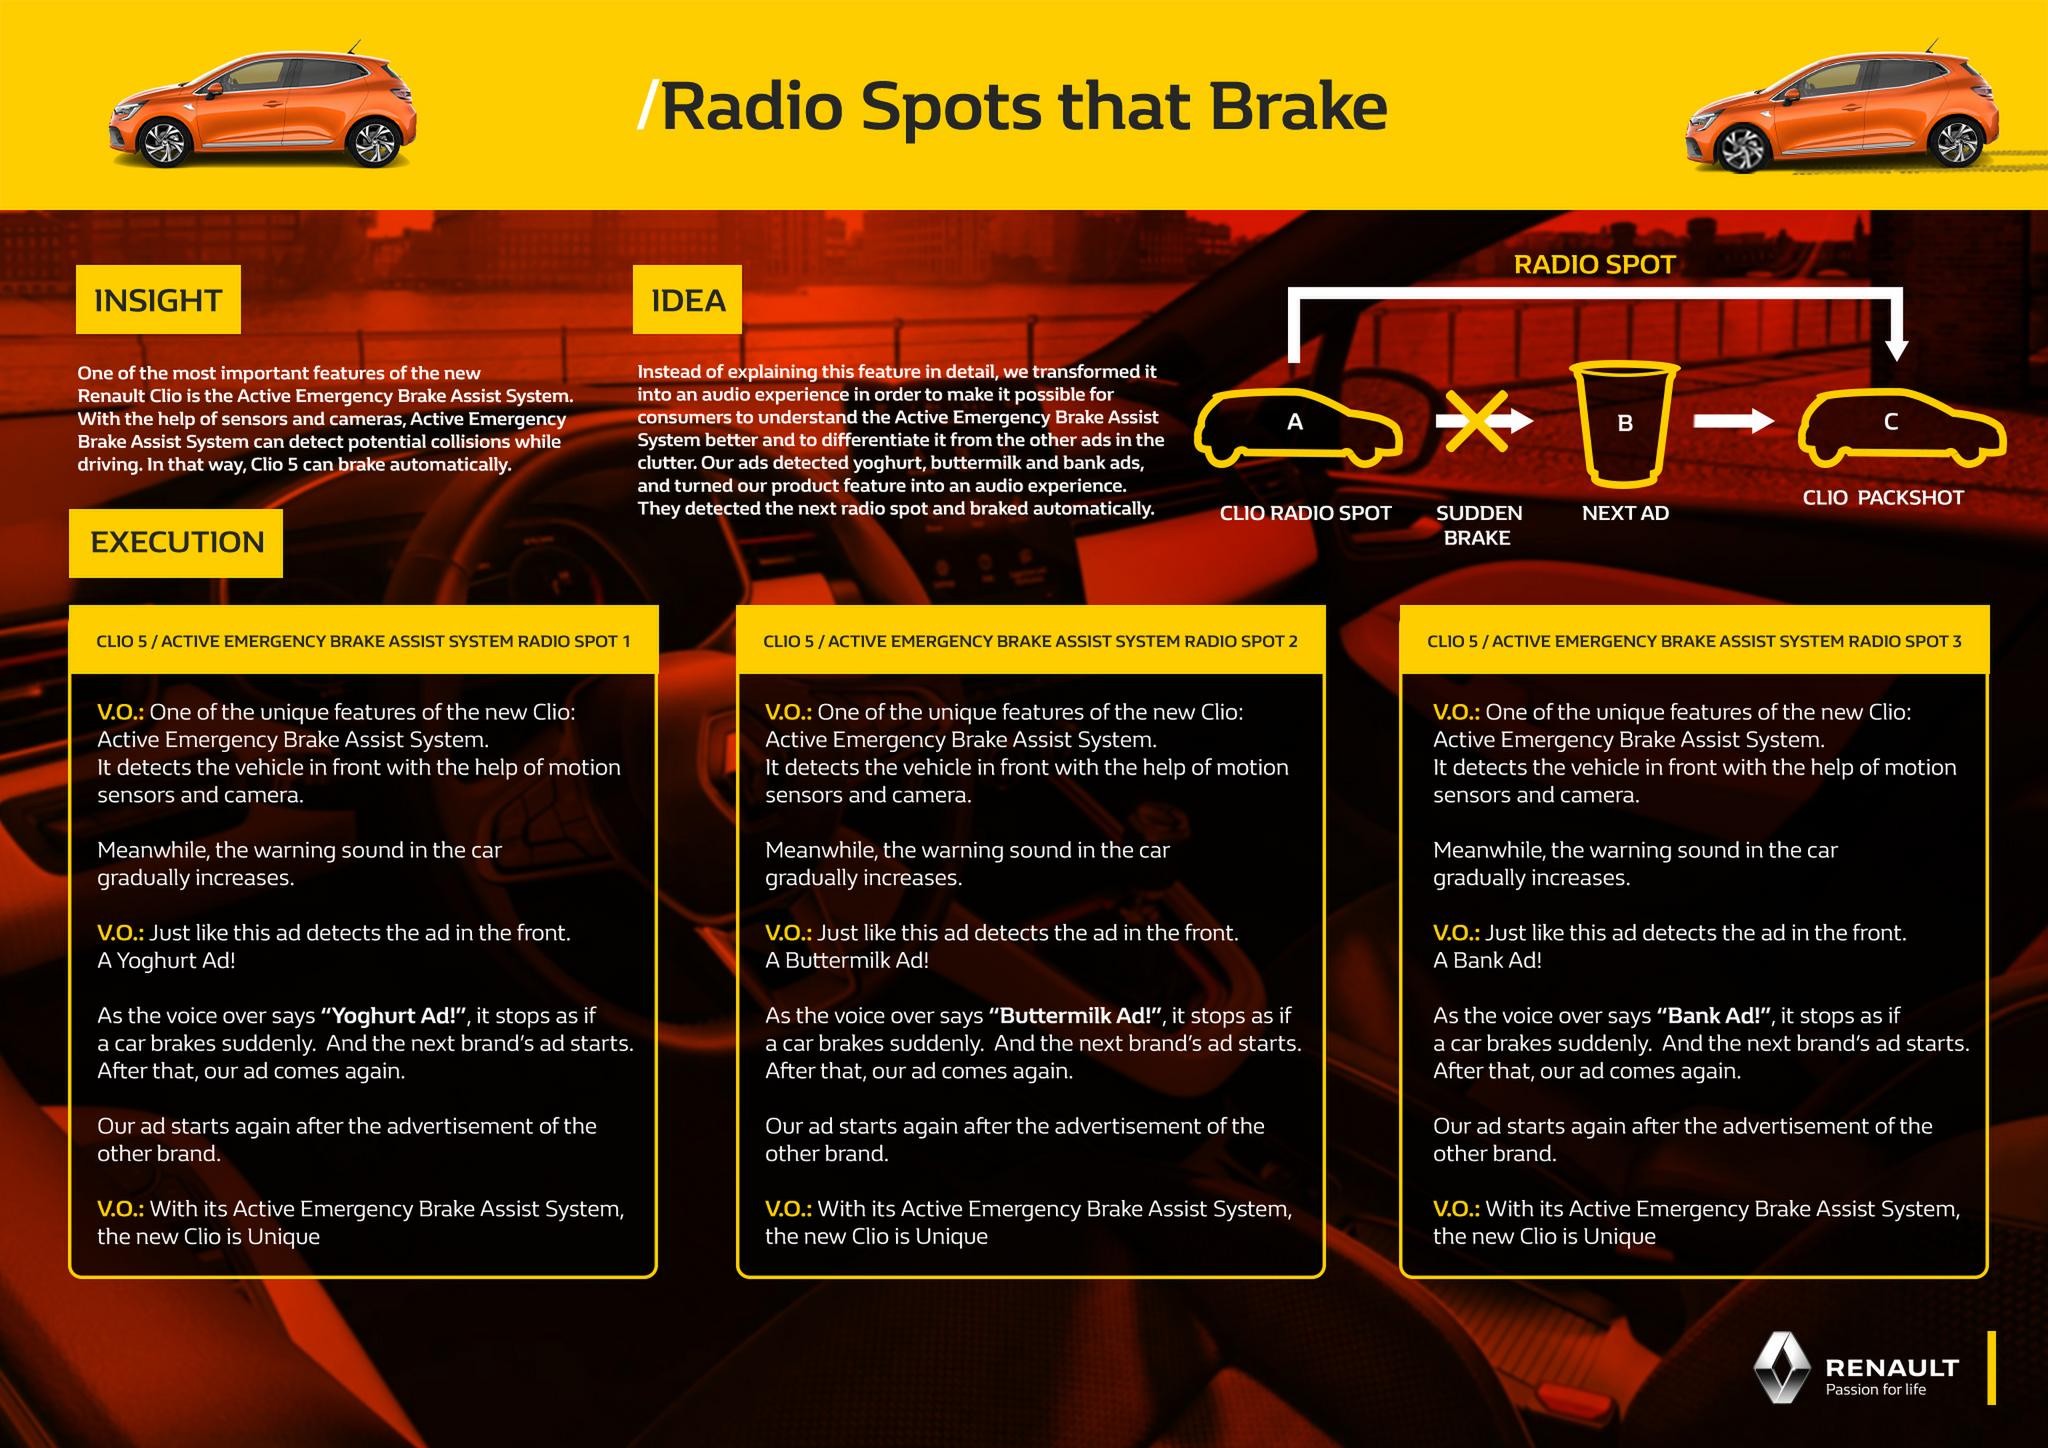 Radio Spots That Brake